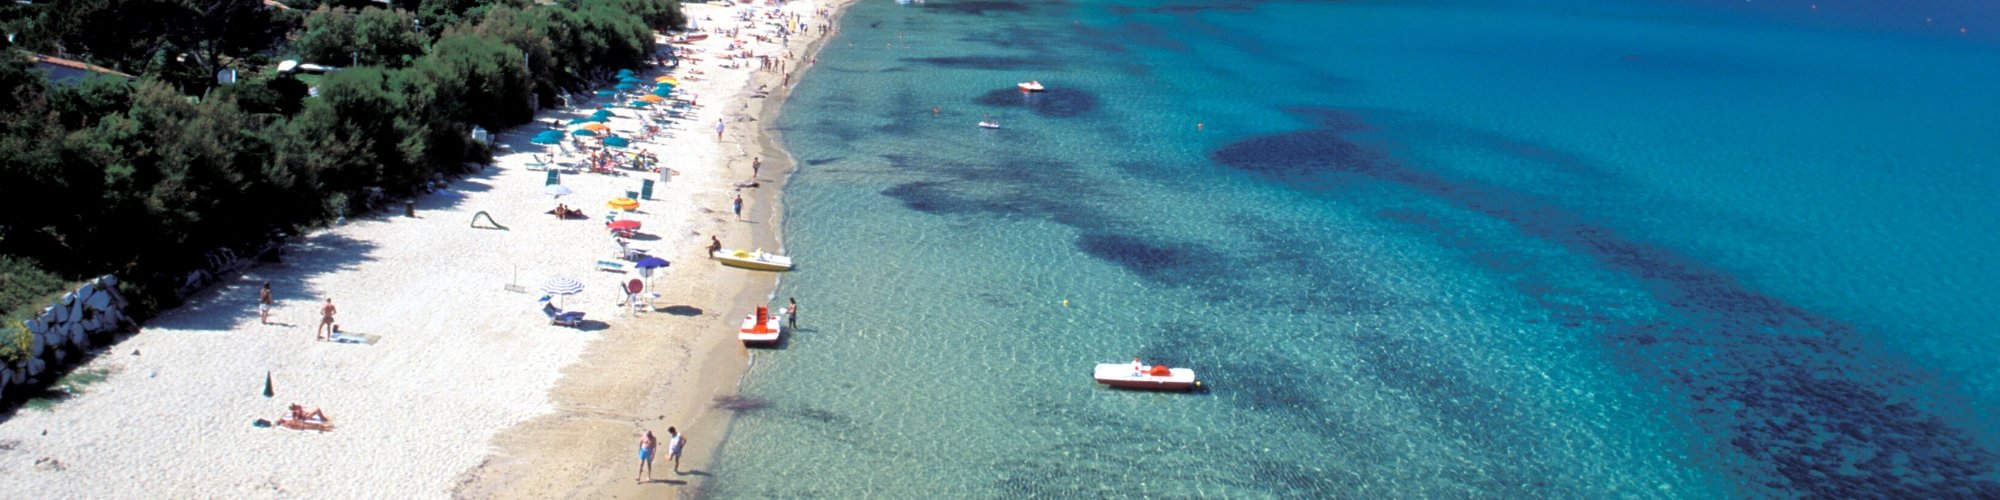 Spiaggia della Biodola, Elba